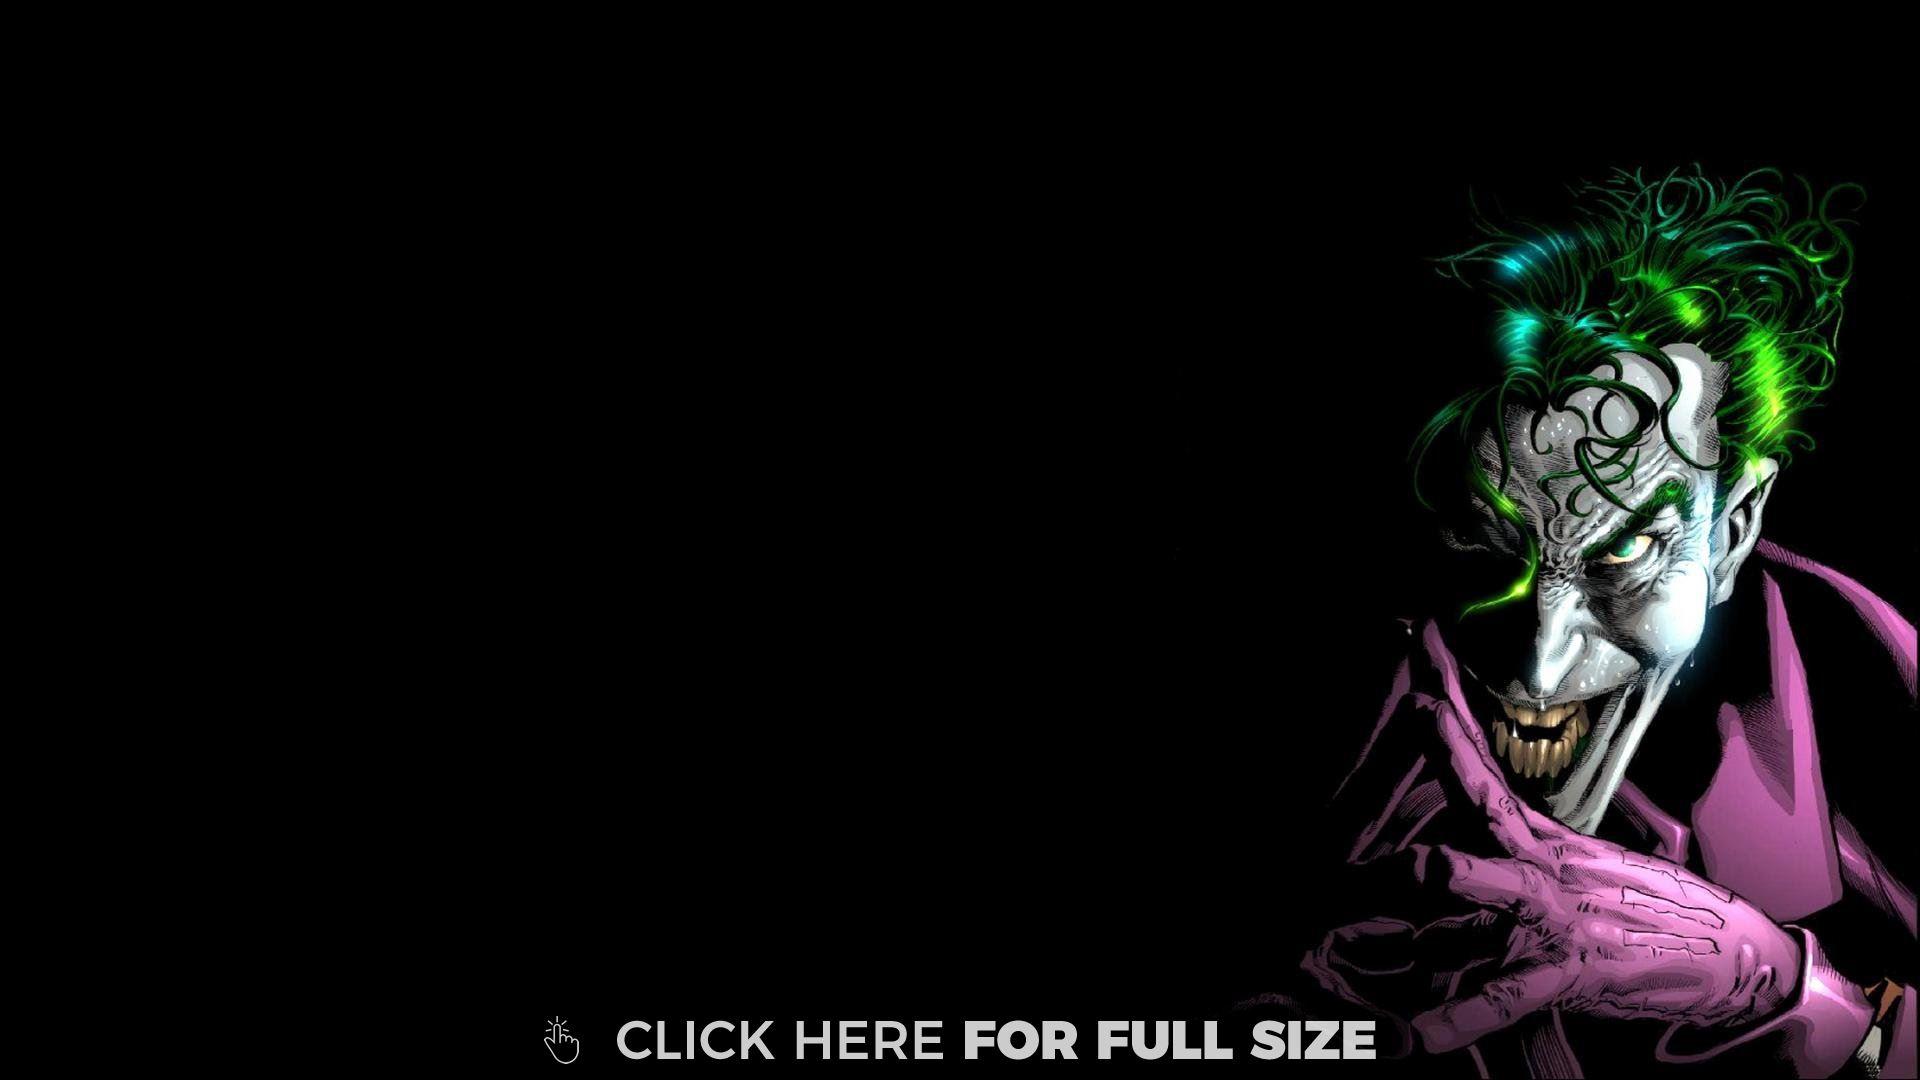 Free download joker wallpaper photo and desktop